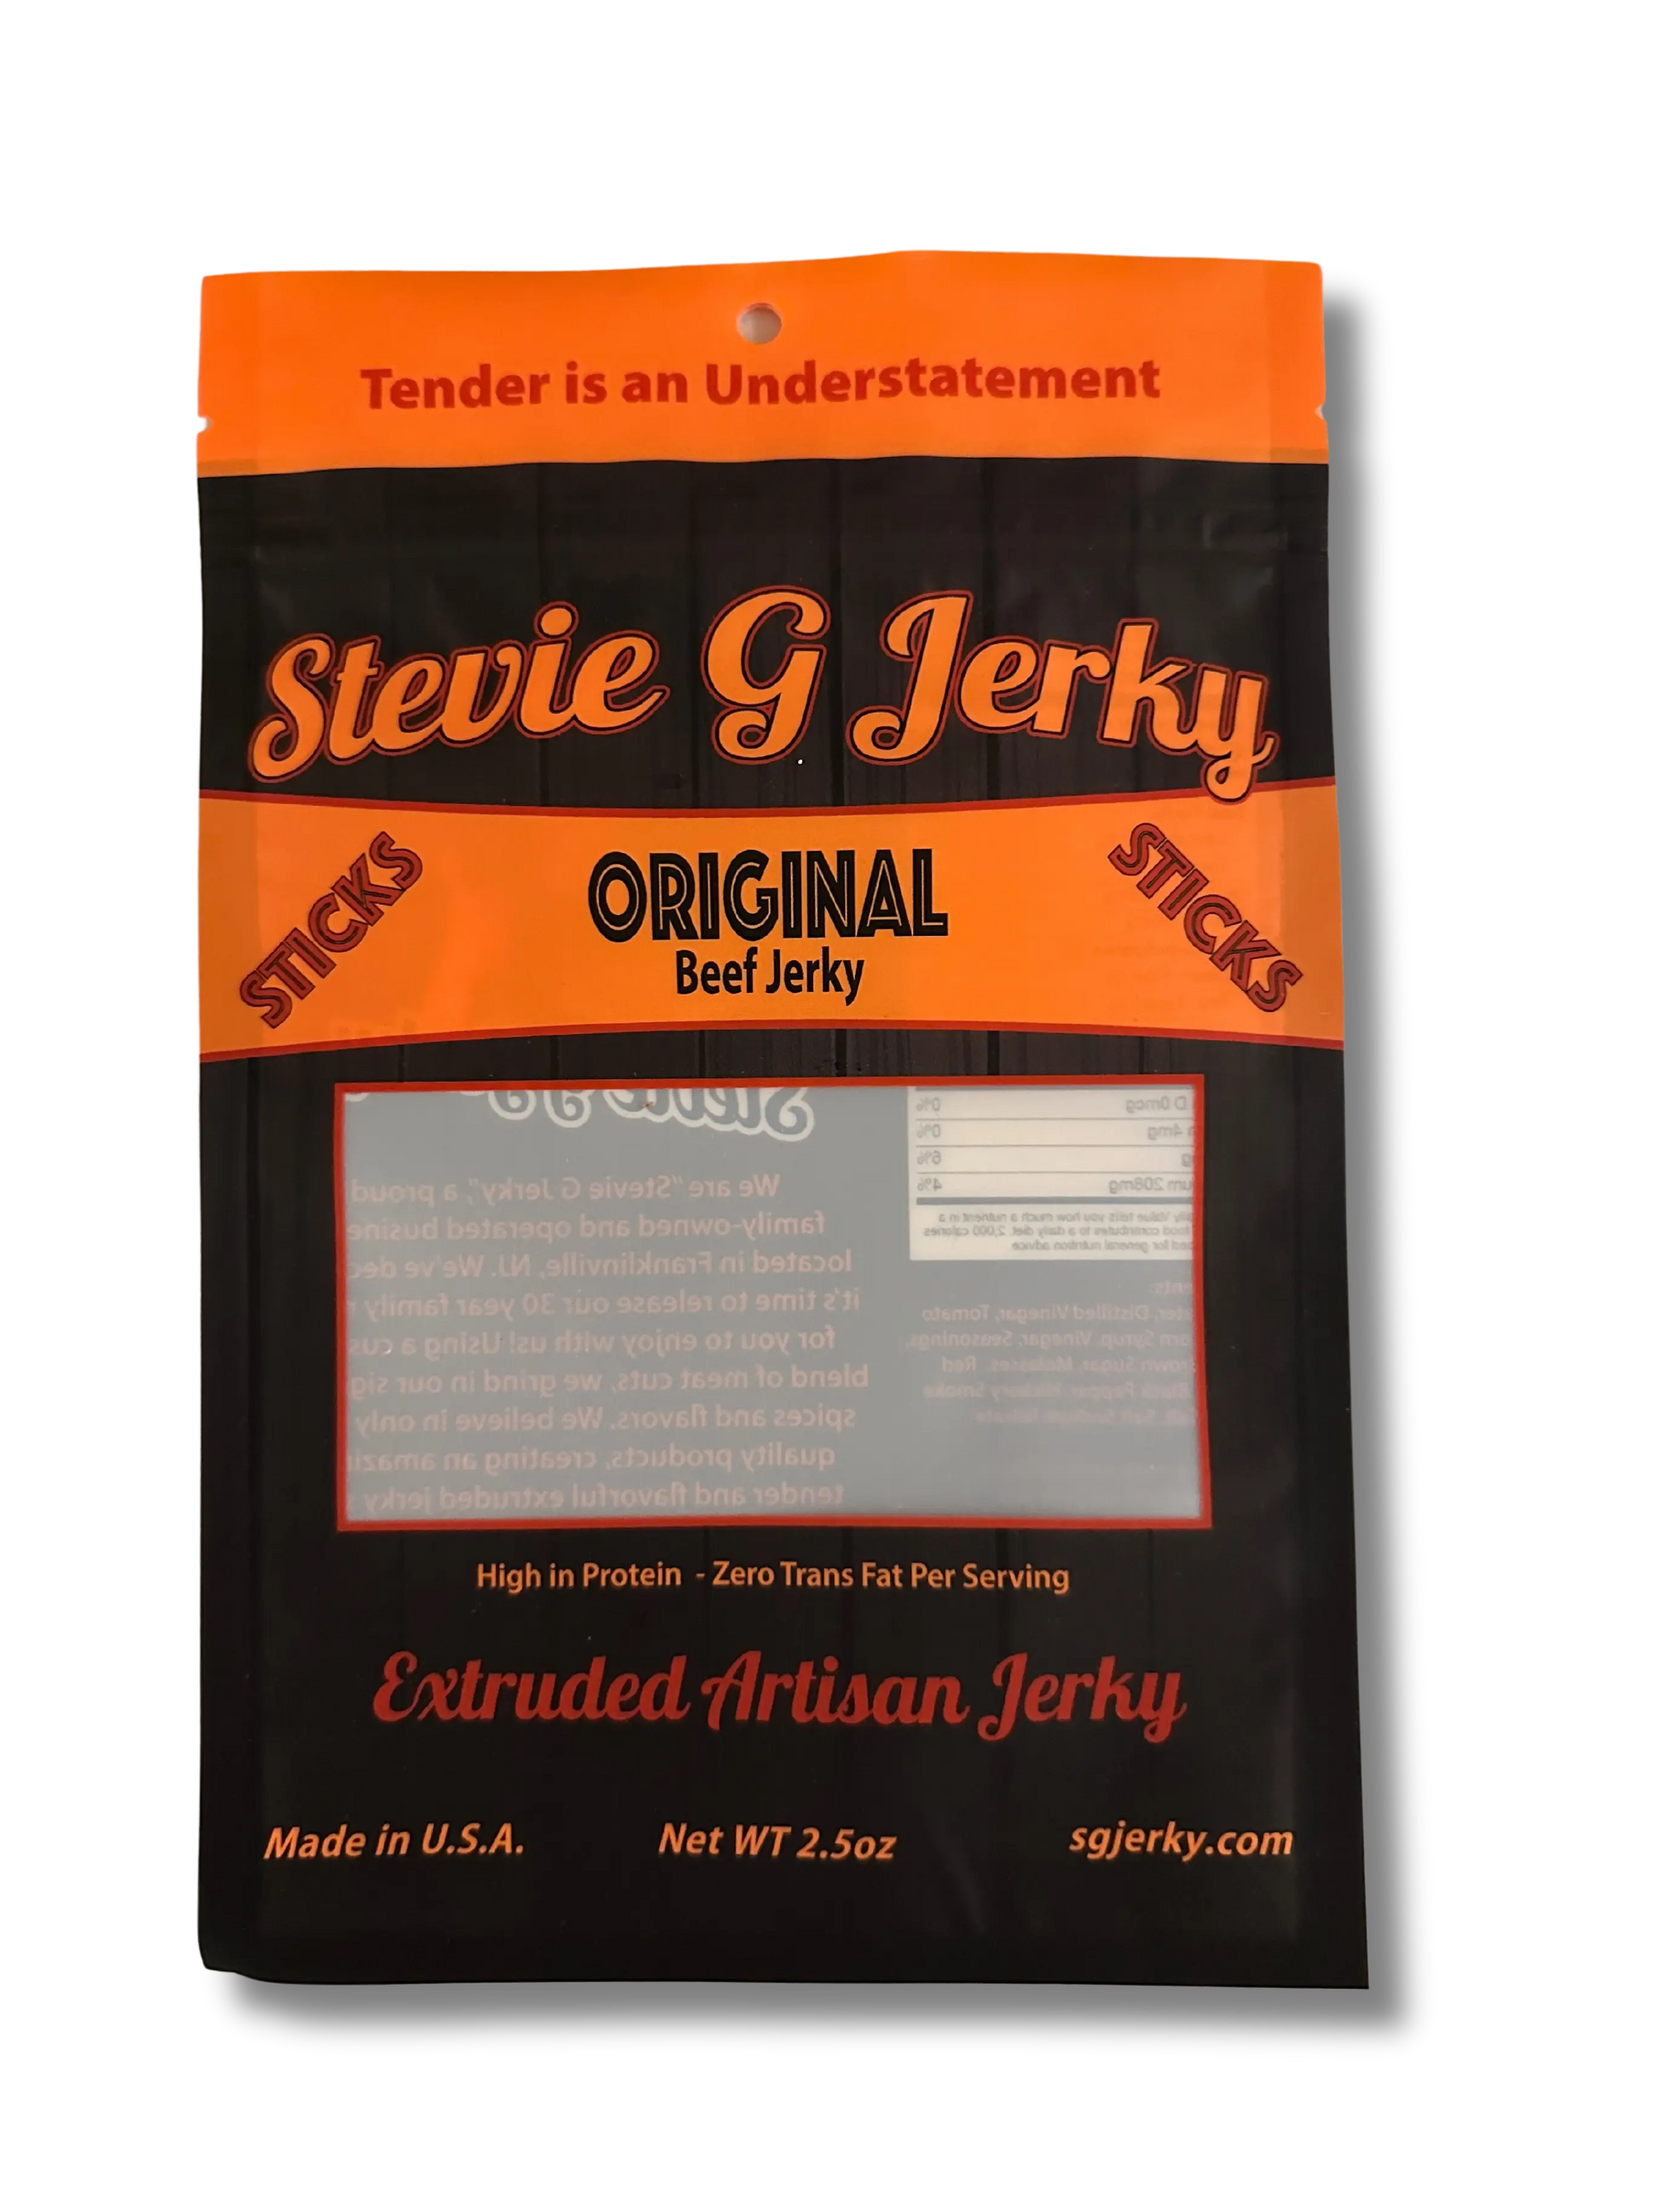 Steve G's original flavor beef jerky - 2.5 oz, different angle